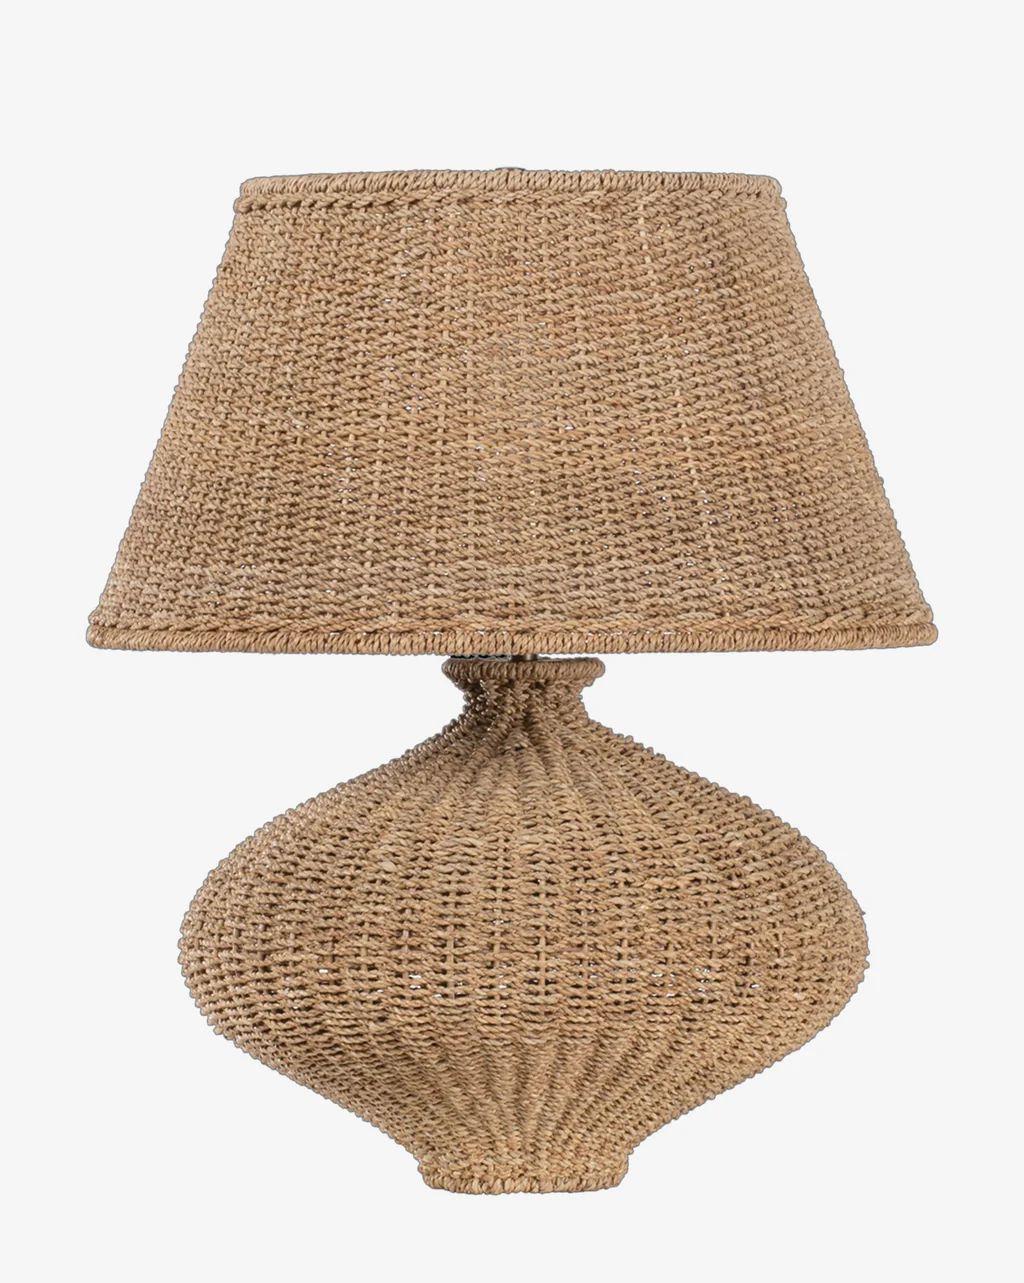 Nette Table Lamp | McGee & Co.